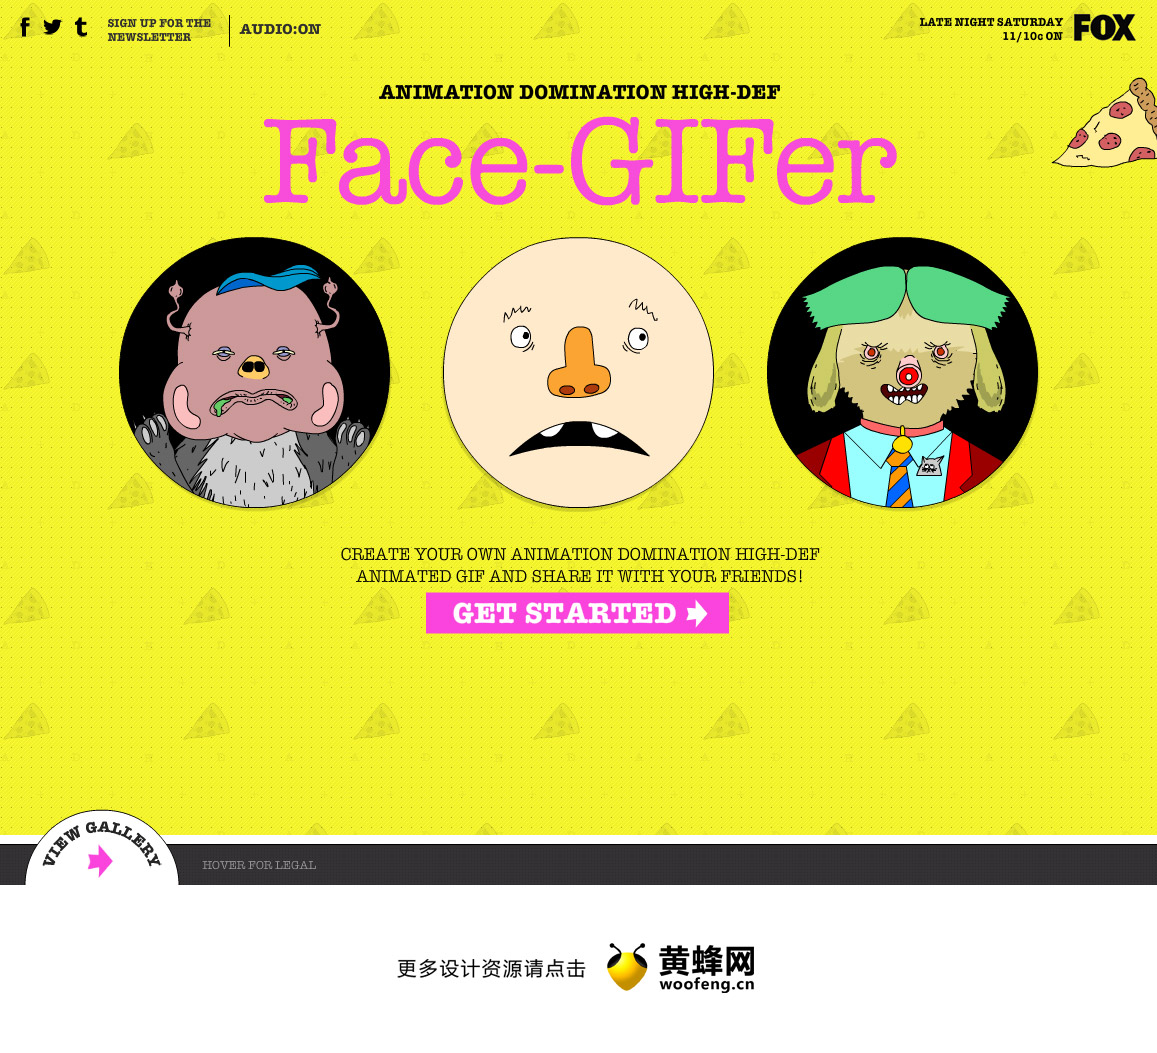 Face-GIF，来源自黄蜂网https://woofeng.cn/